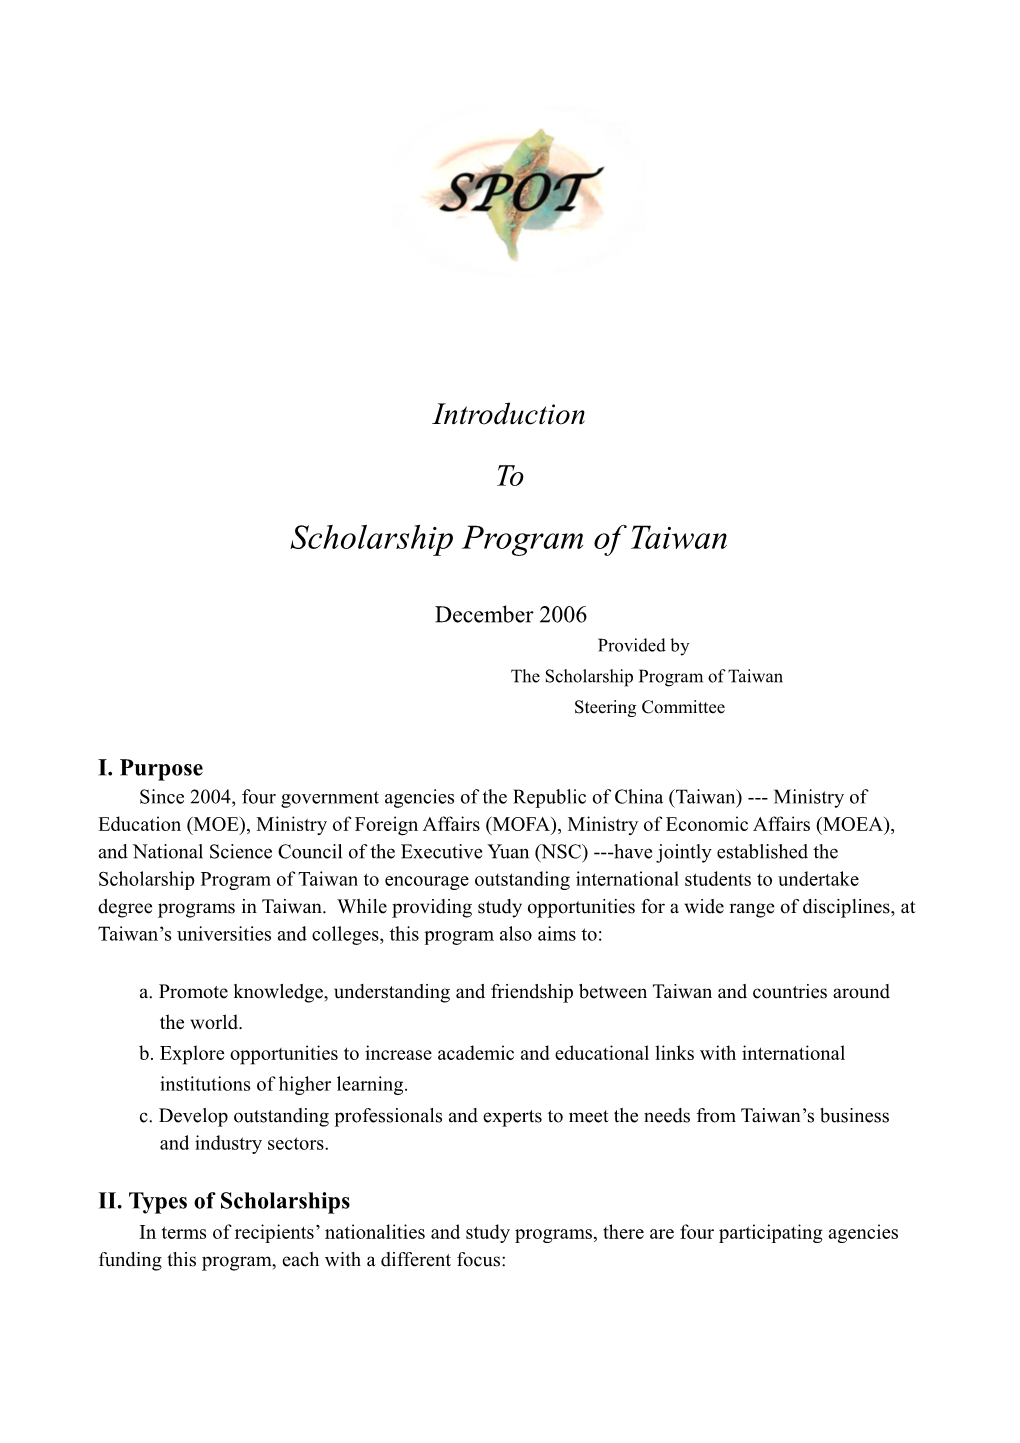 The Scholarship Program of Taiwan